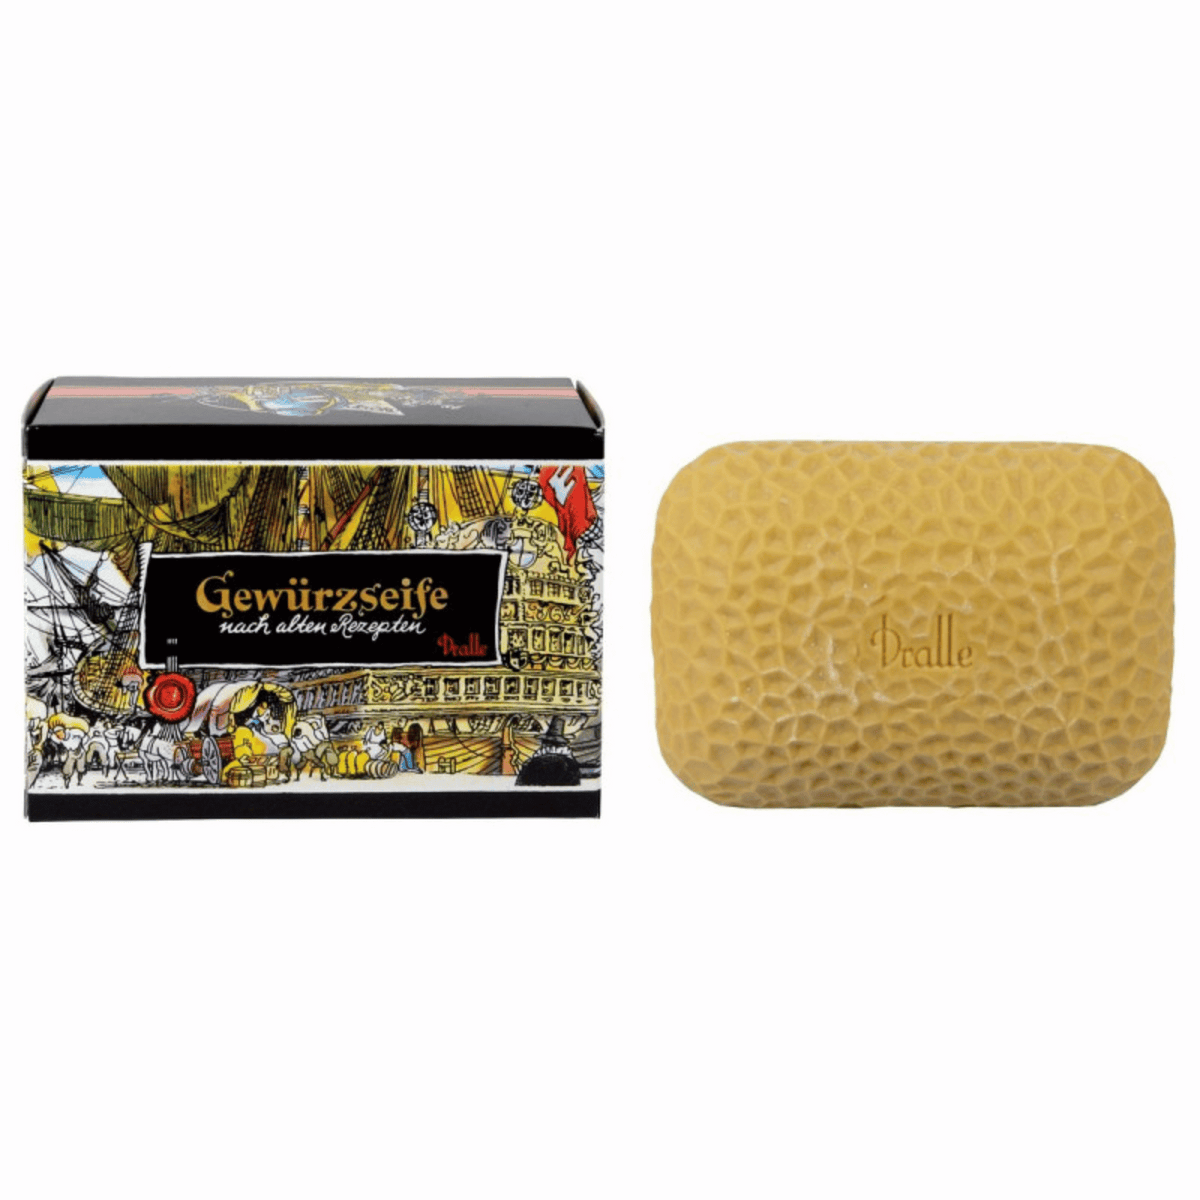 Primary Image of Gewurtzseife (Herbal Spice Soap)